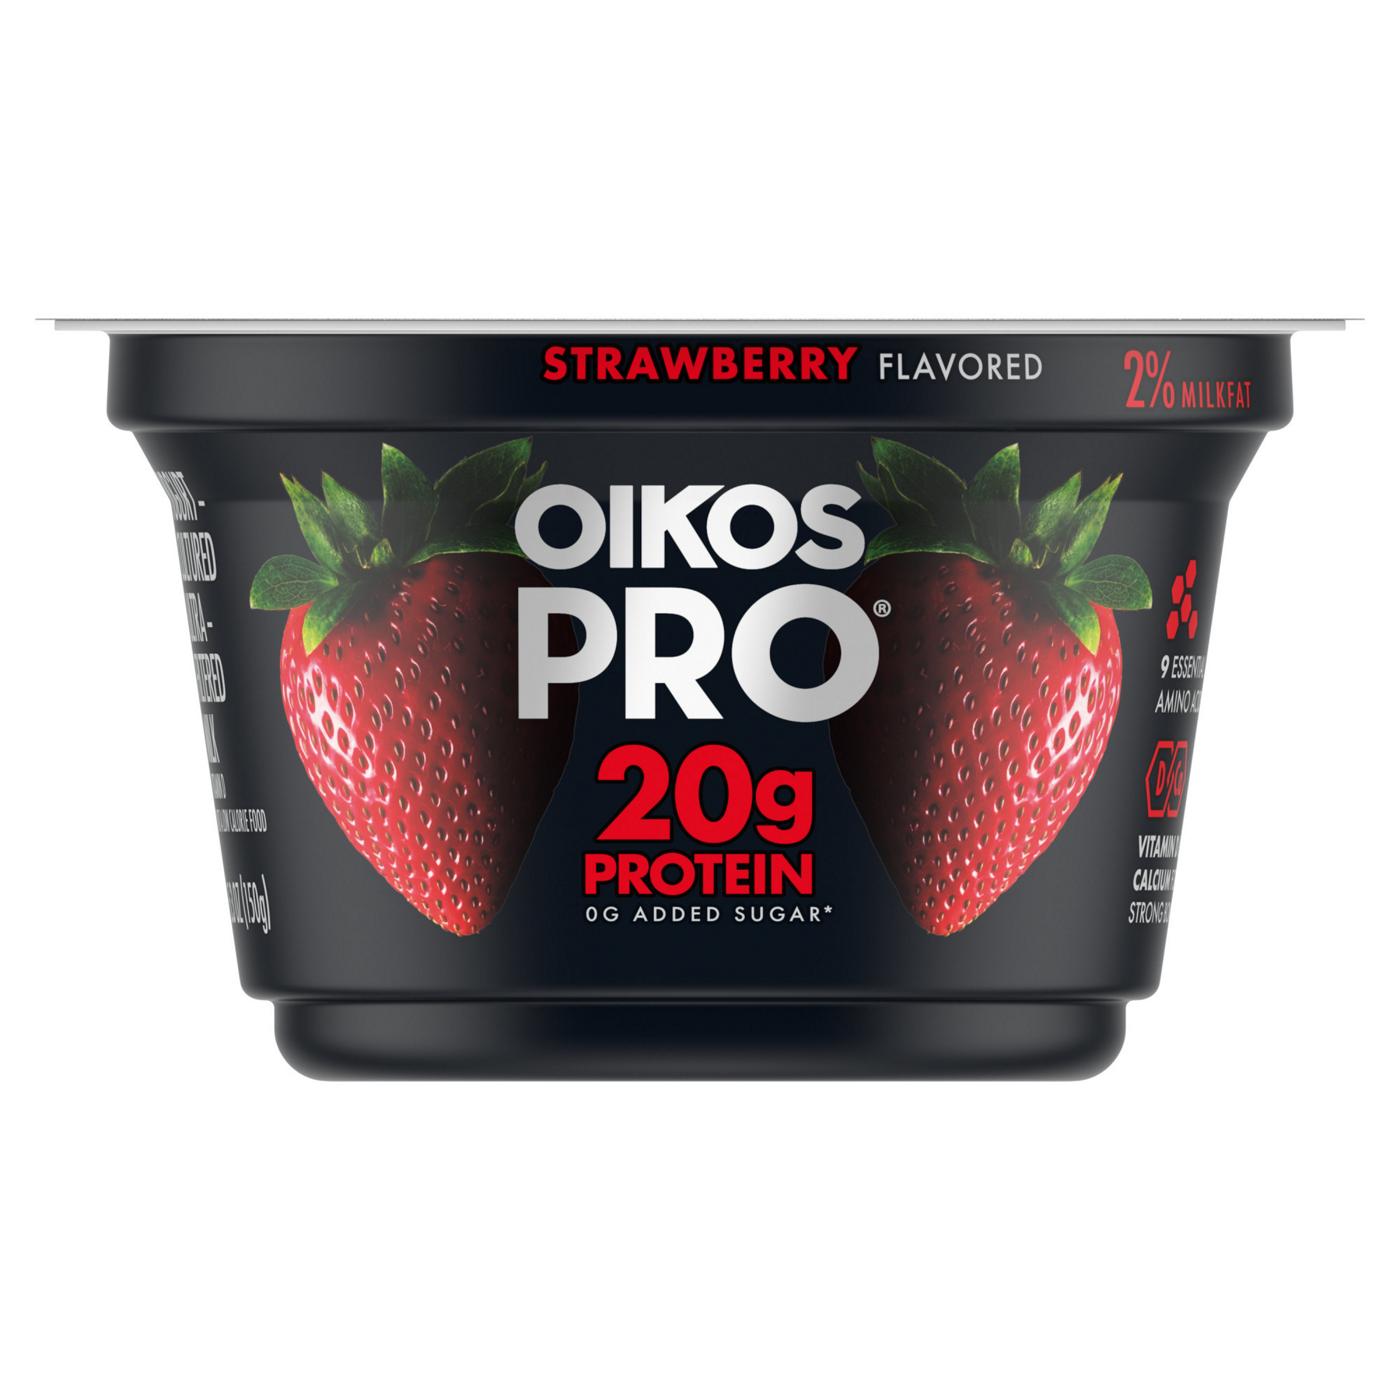 Dannon Oikos Pro Strawberry Yogurt; image 1 of 7